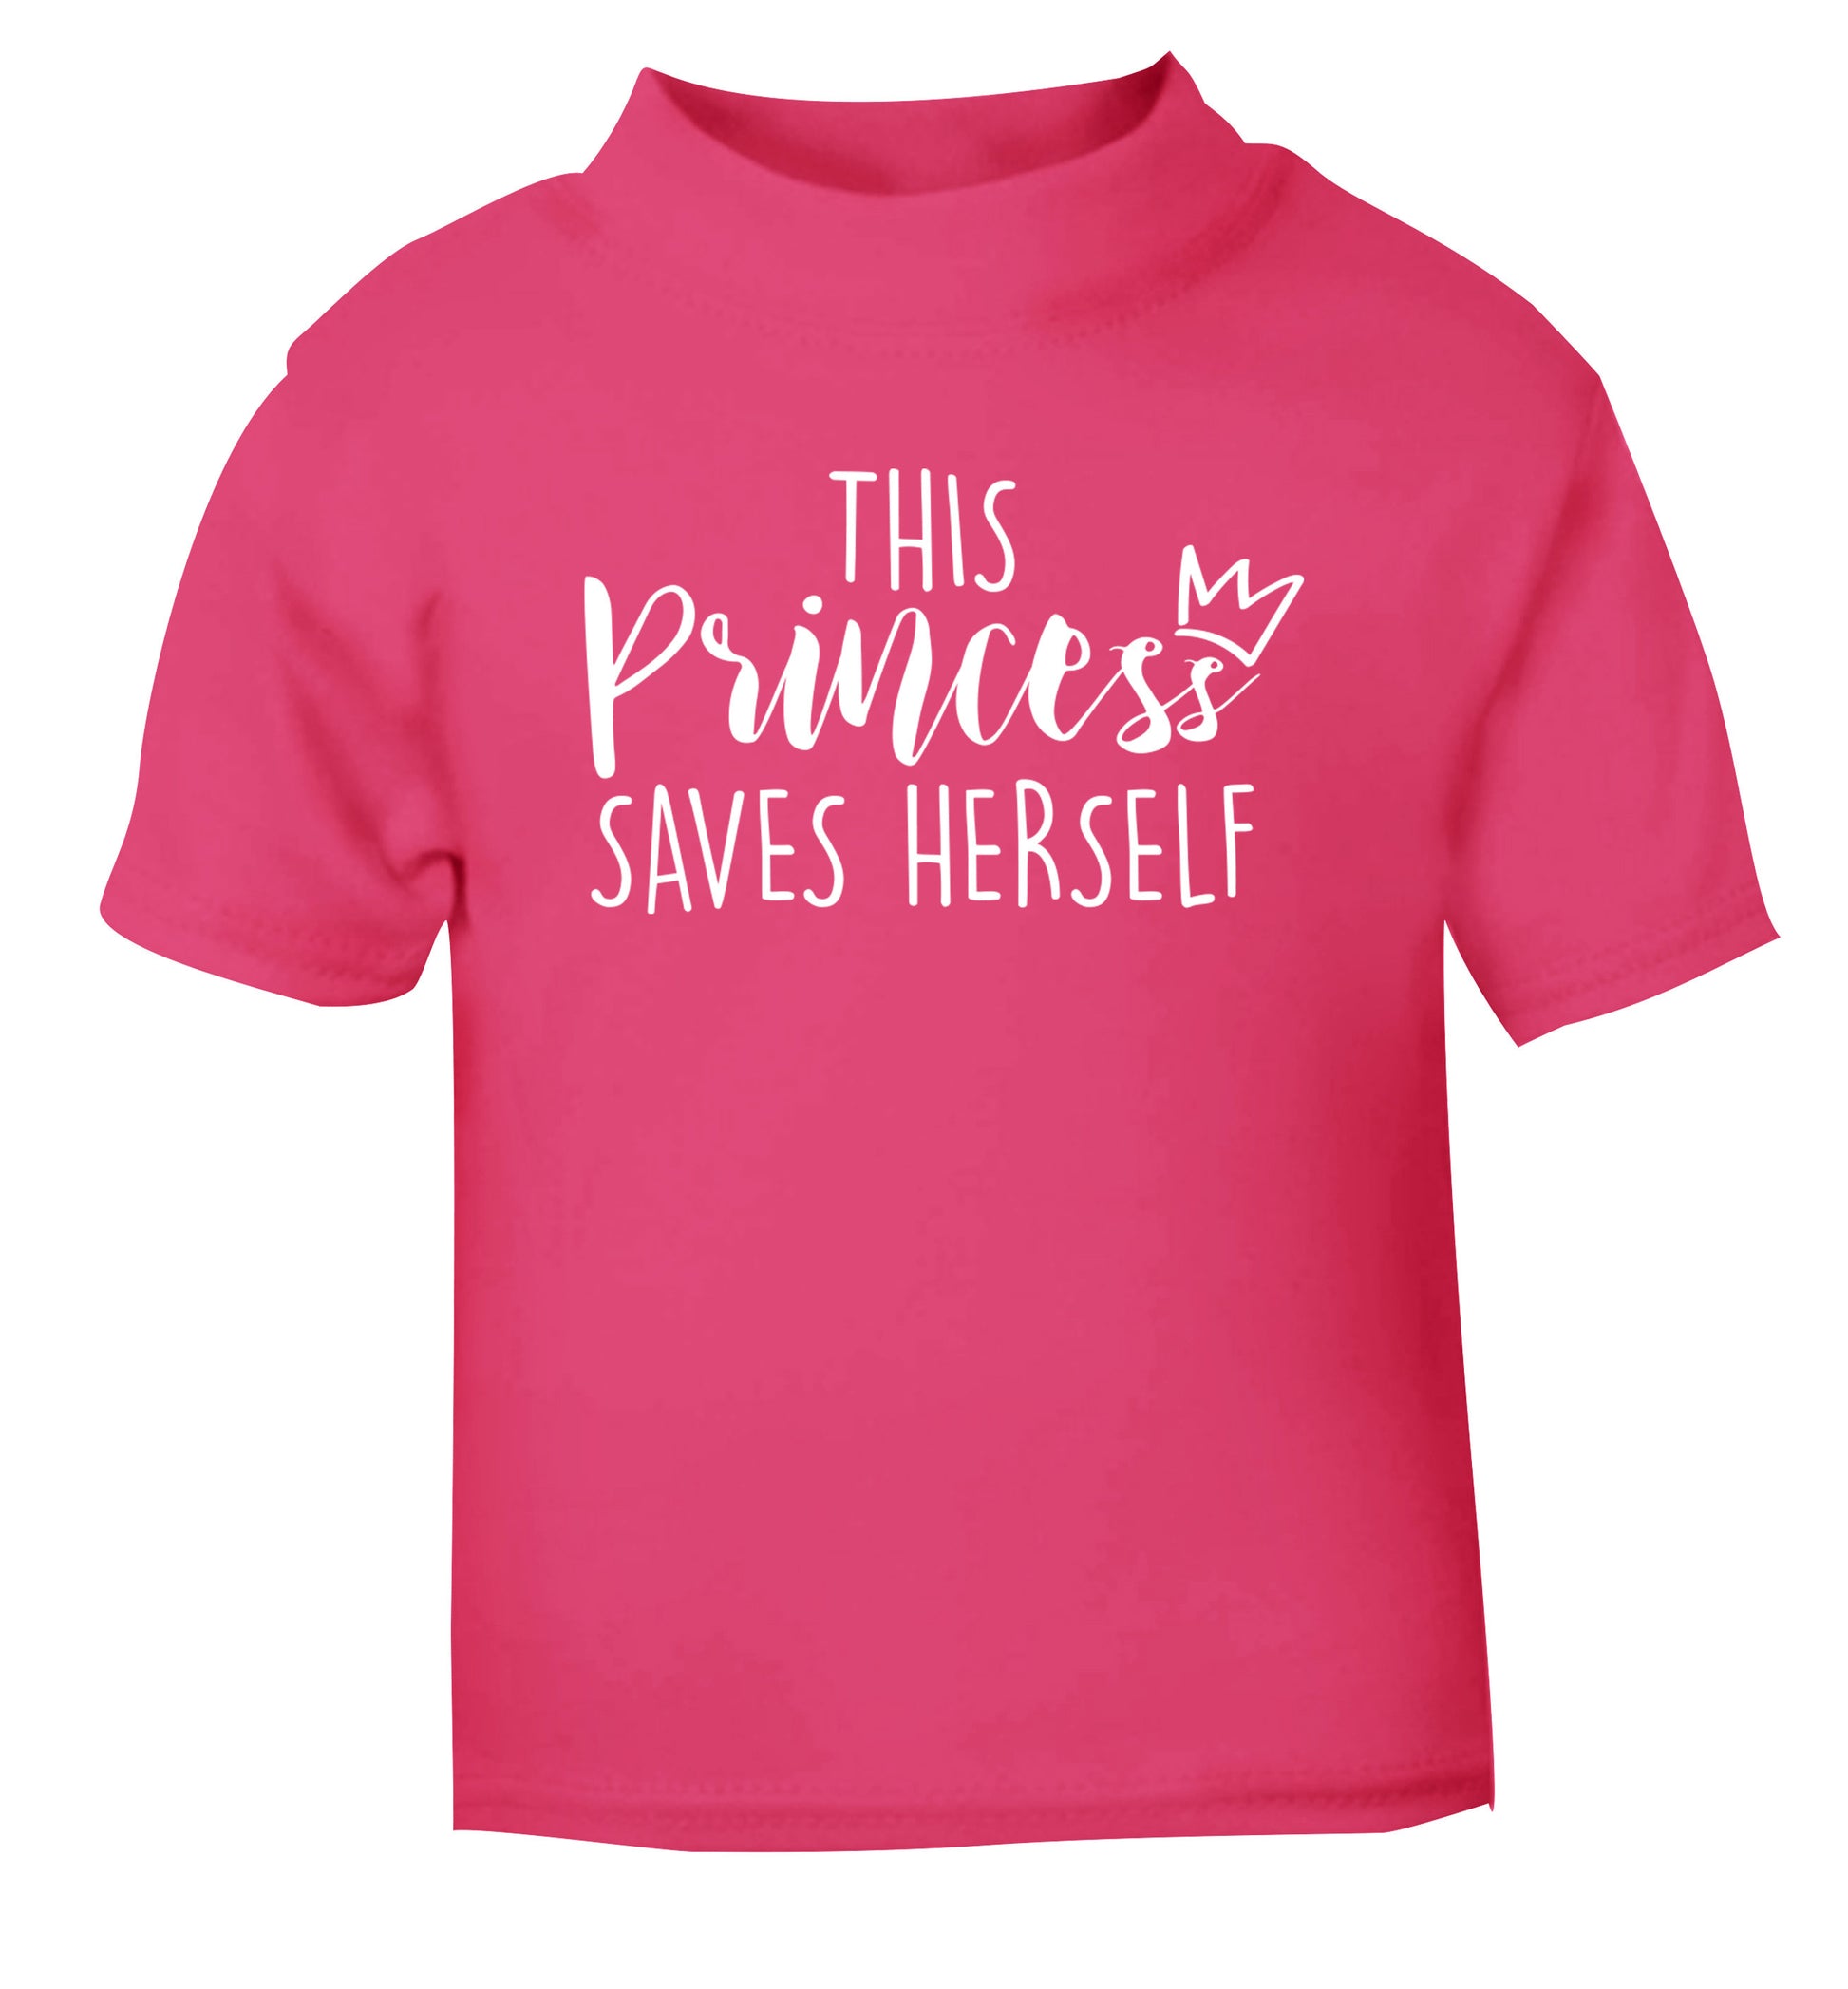 This princess saves herself pink Baby Toddler Tshirt 2 Years